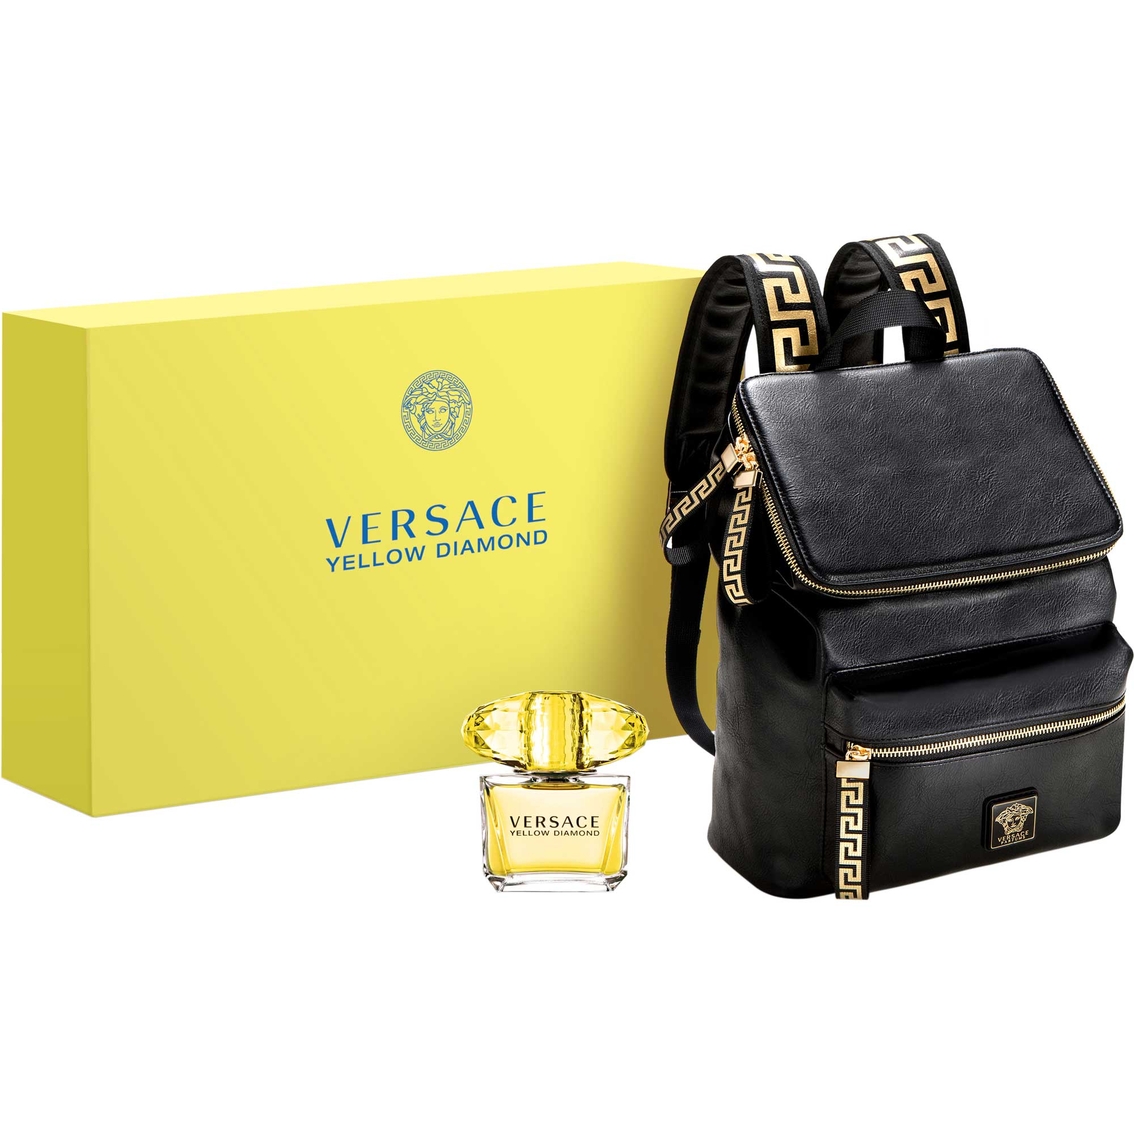 Versace Yellow Diamond Eau De Toilette And Backpack Gift Set | Gift ...